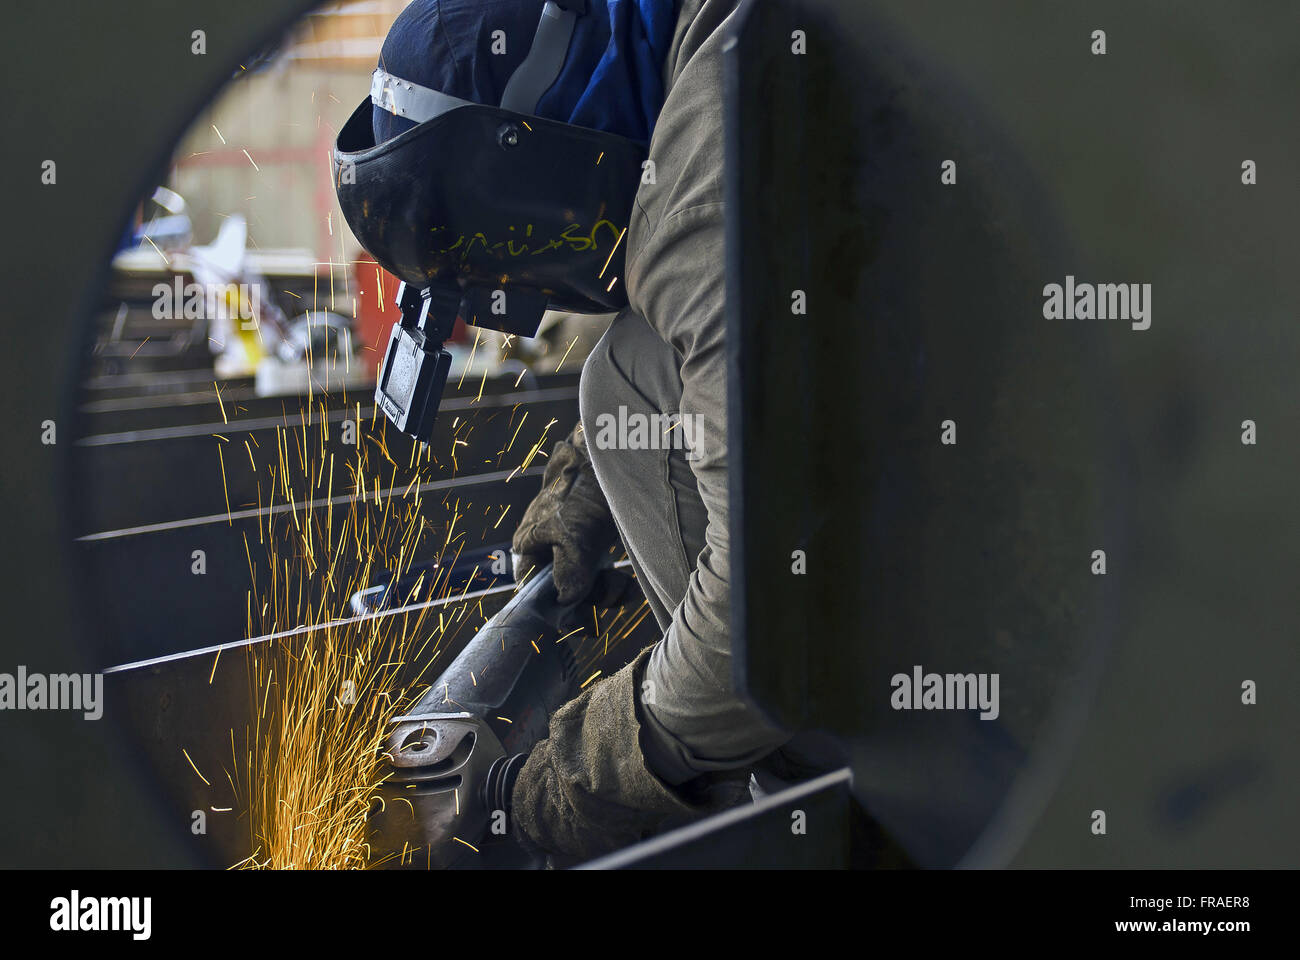 Laborer with sander in shipbuilding Stock Photo